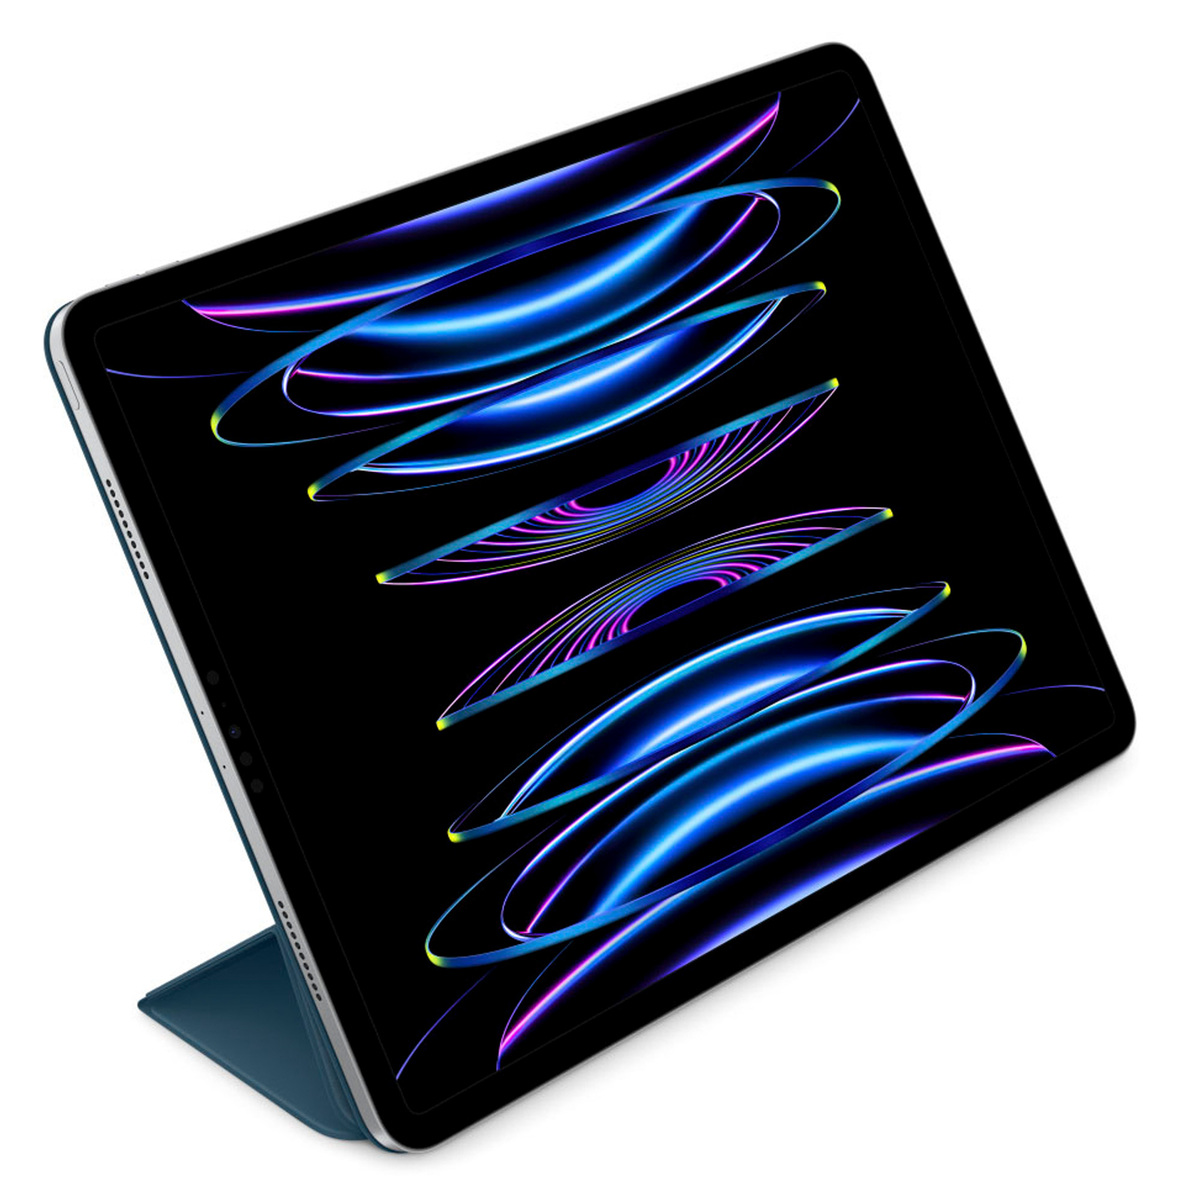 Apple Smart Folio for iPad Pro (6th generation), 12.9 inches, Marine Blue, MQDW3ZE